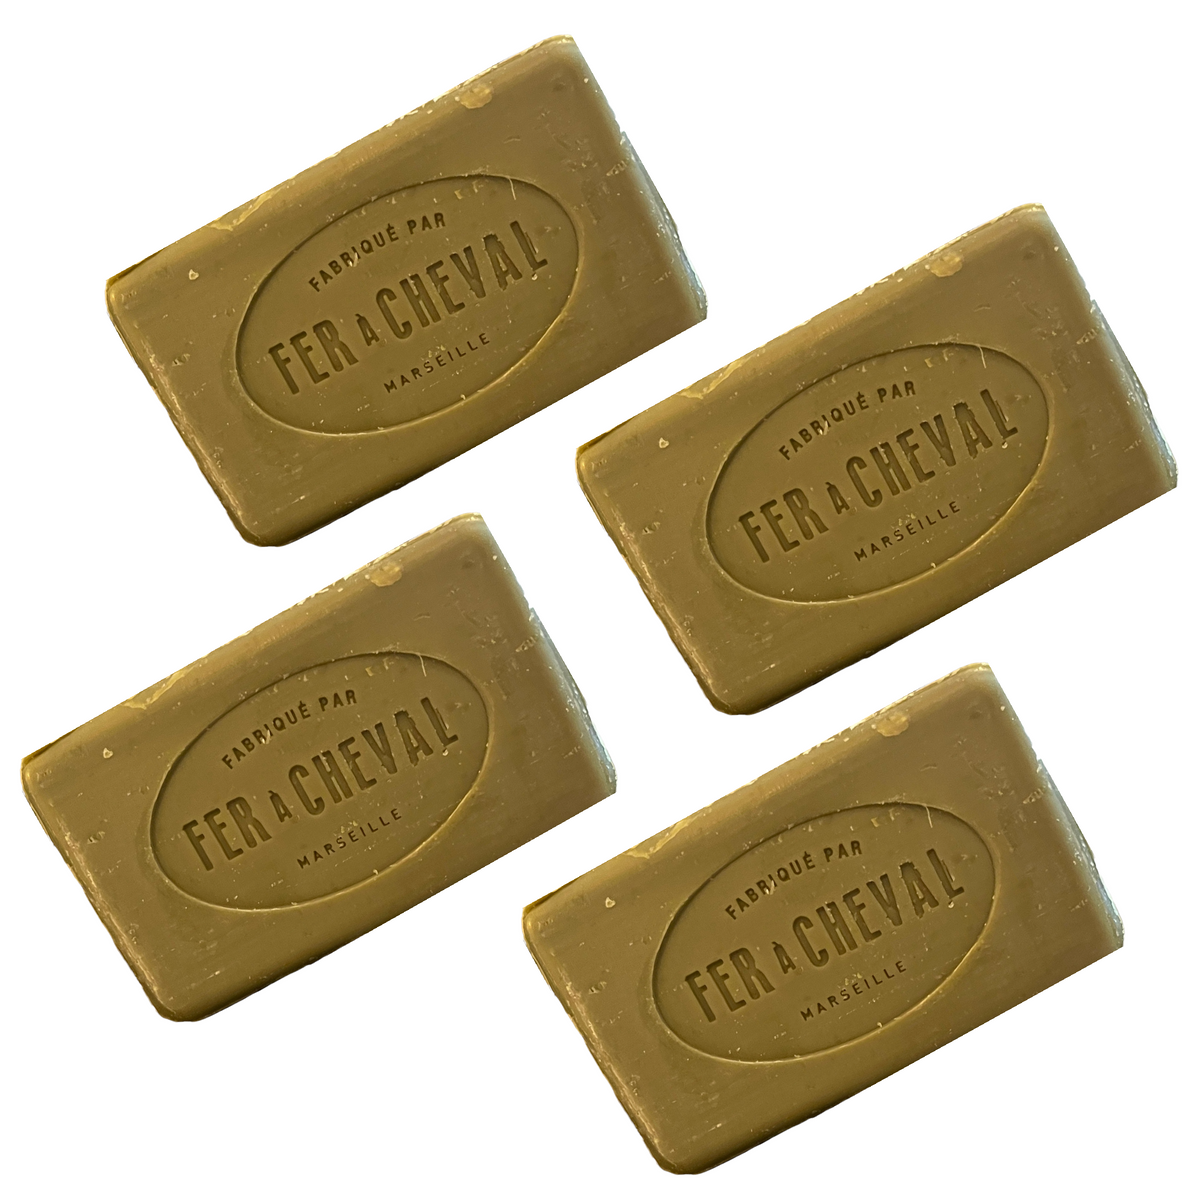 4 x 100g Fer â Cheval 72% Olive Oil soap bar